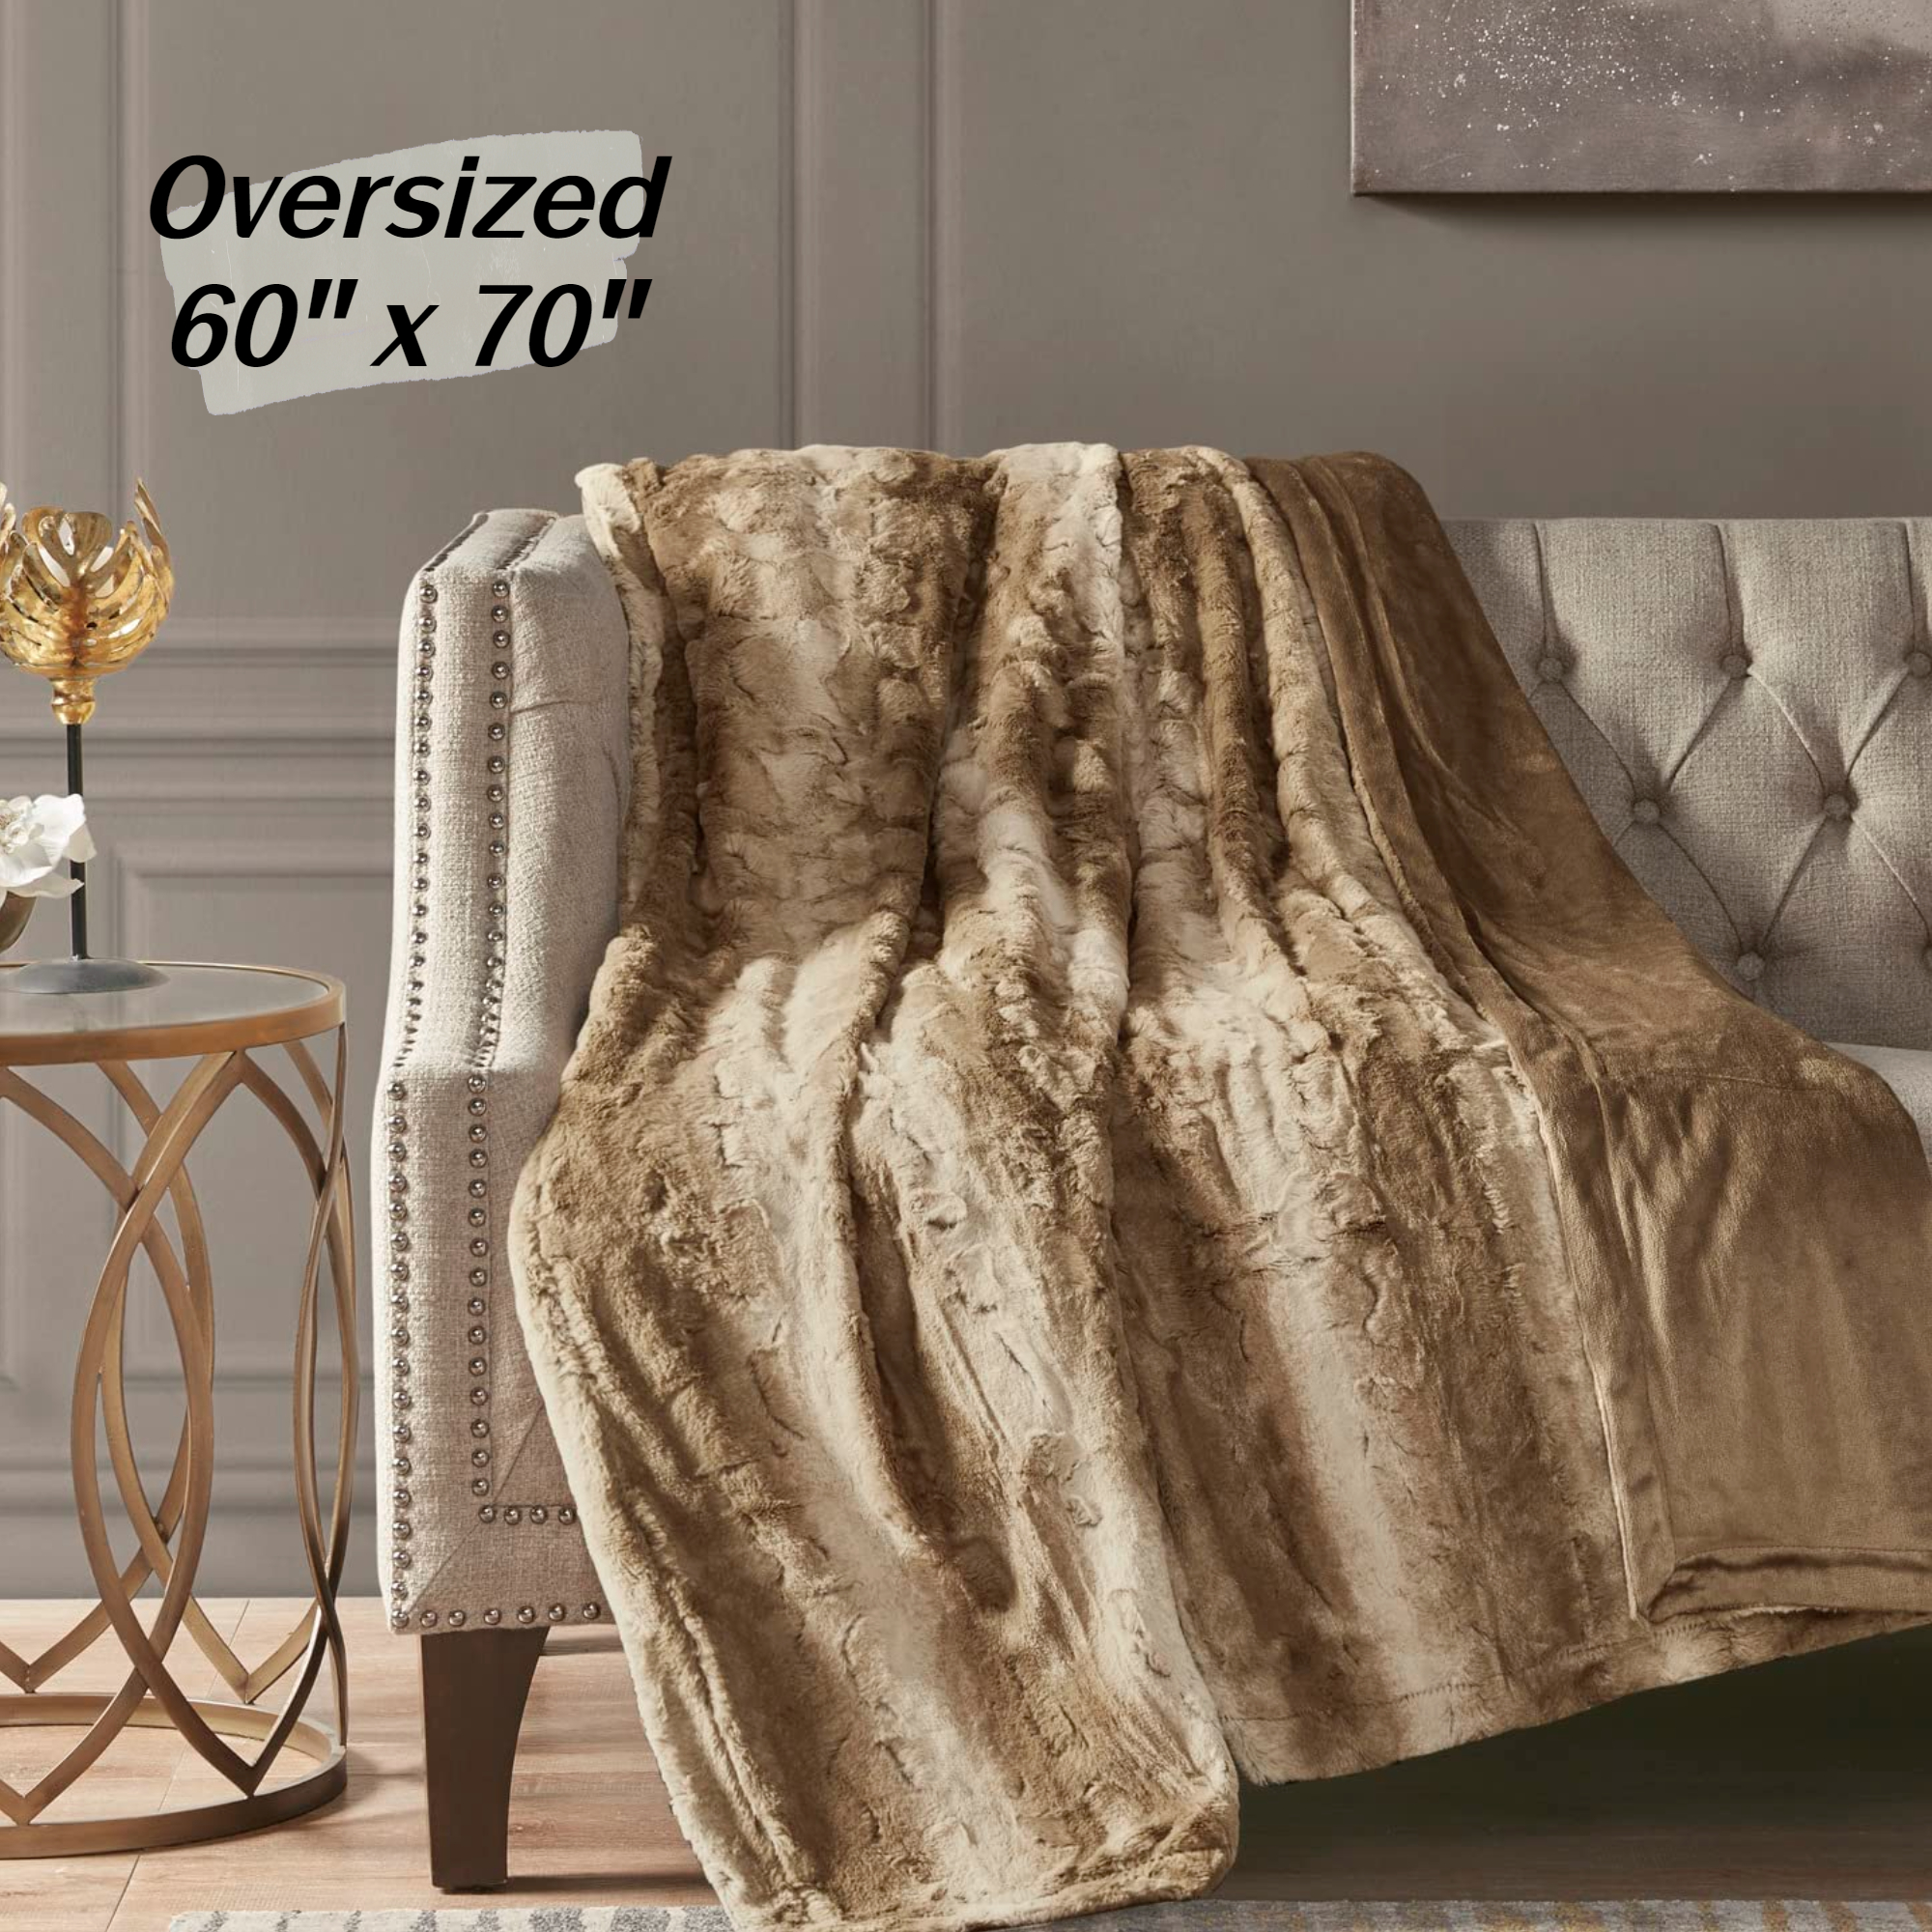 Madison Park Luxury Oversized Faux Fur Throw Soft Plush Luxury Stripes Design 60x70" Blanket, Tan - image 2 of 6